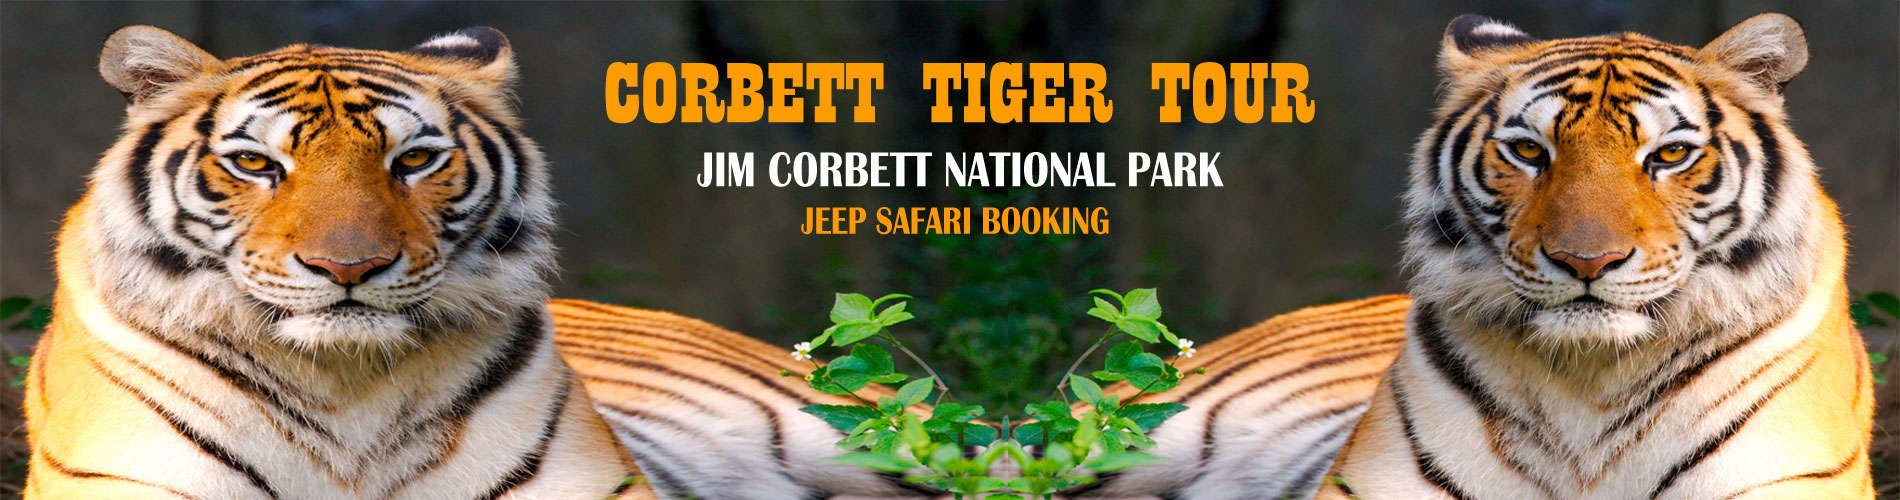 Corbett Tiger Tour